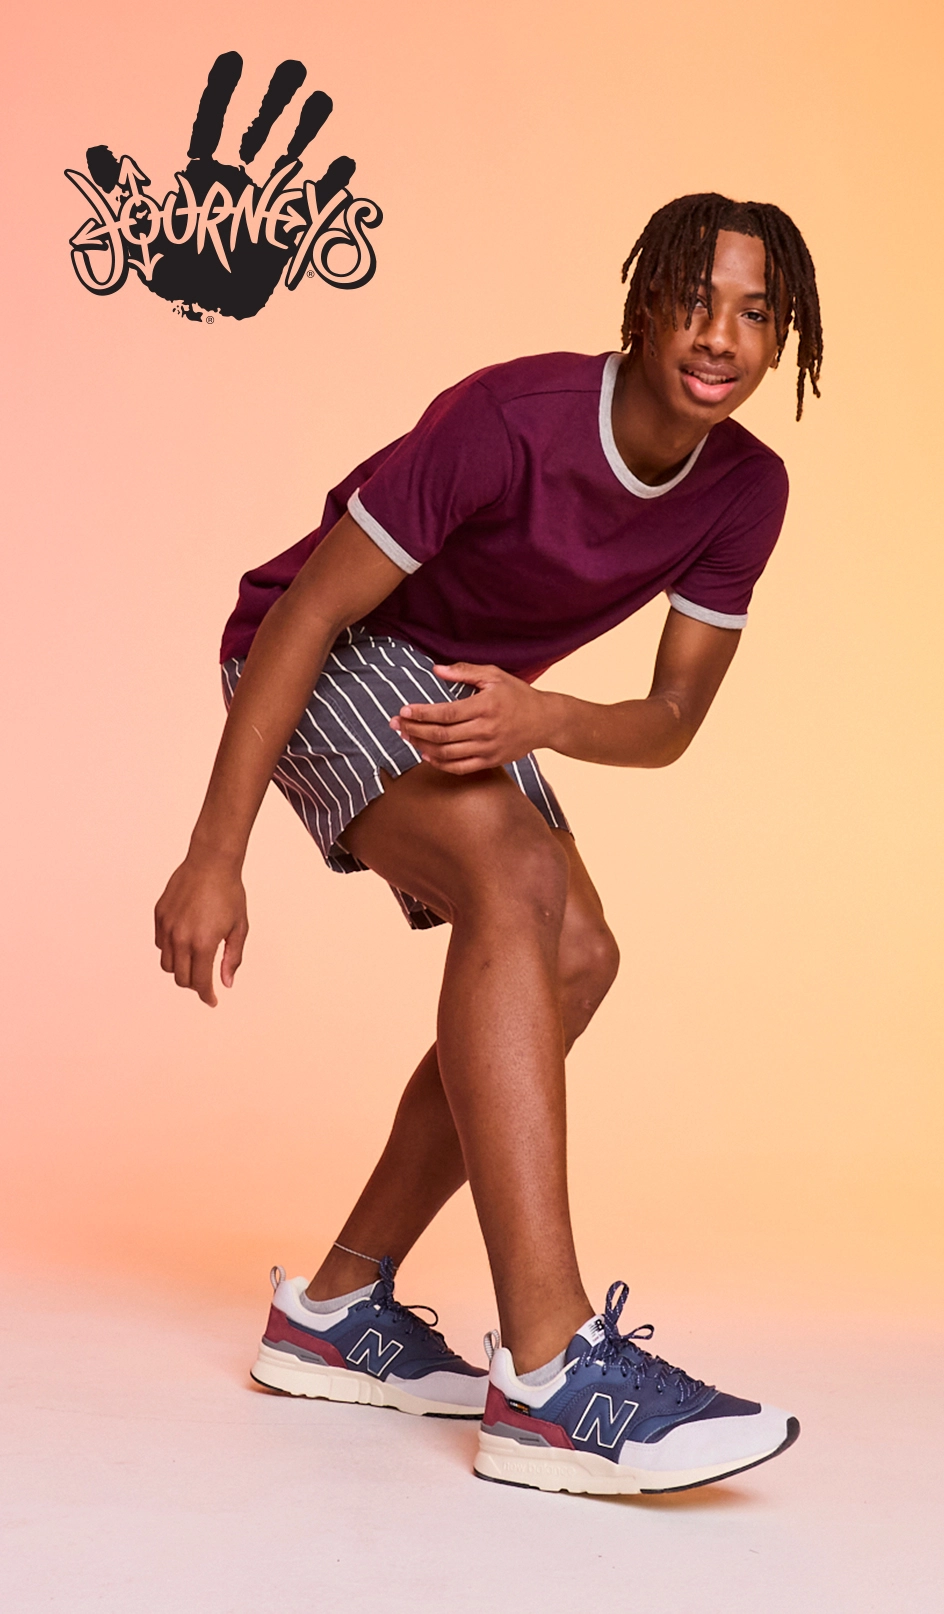 Teenage girl posing in Journeys brand shoes/apparel